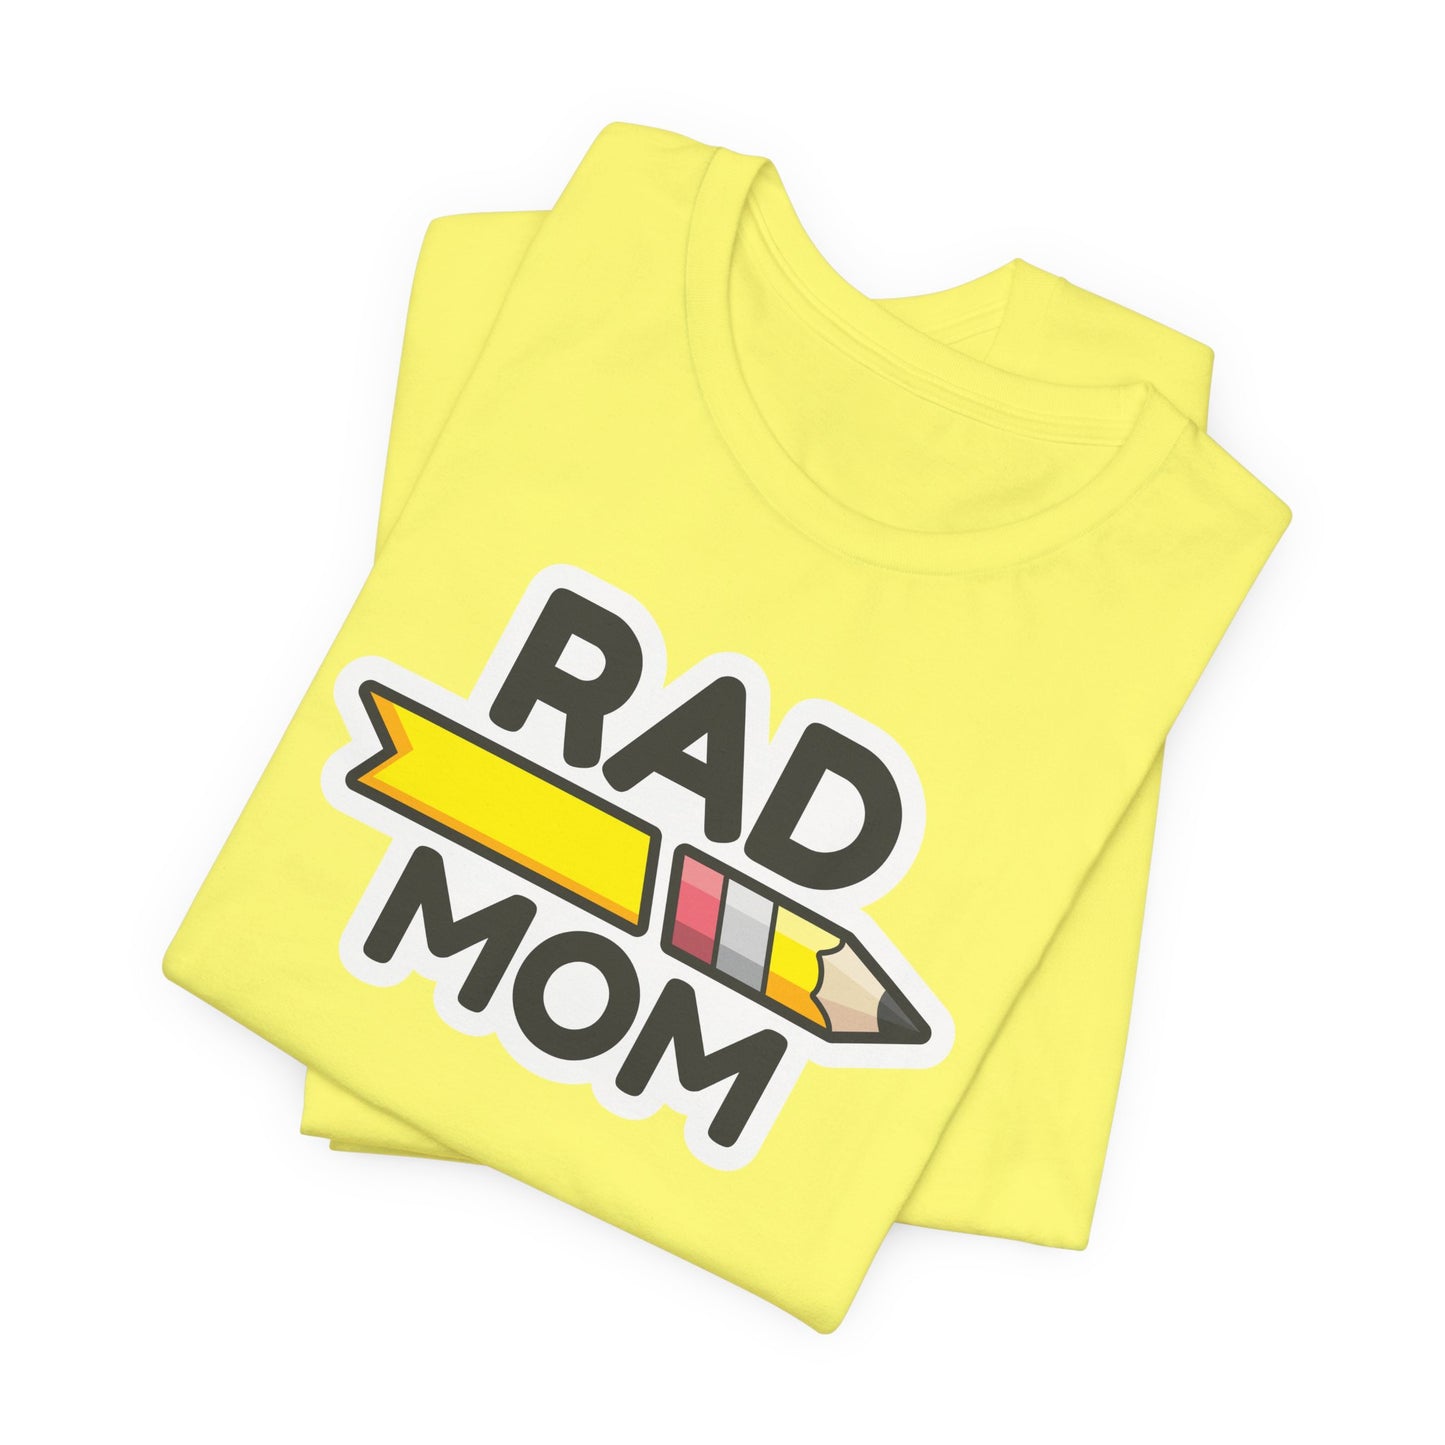 "RAD MOM" SQUAD Jersey Short Sleeve Tee